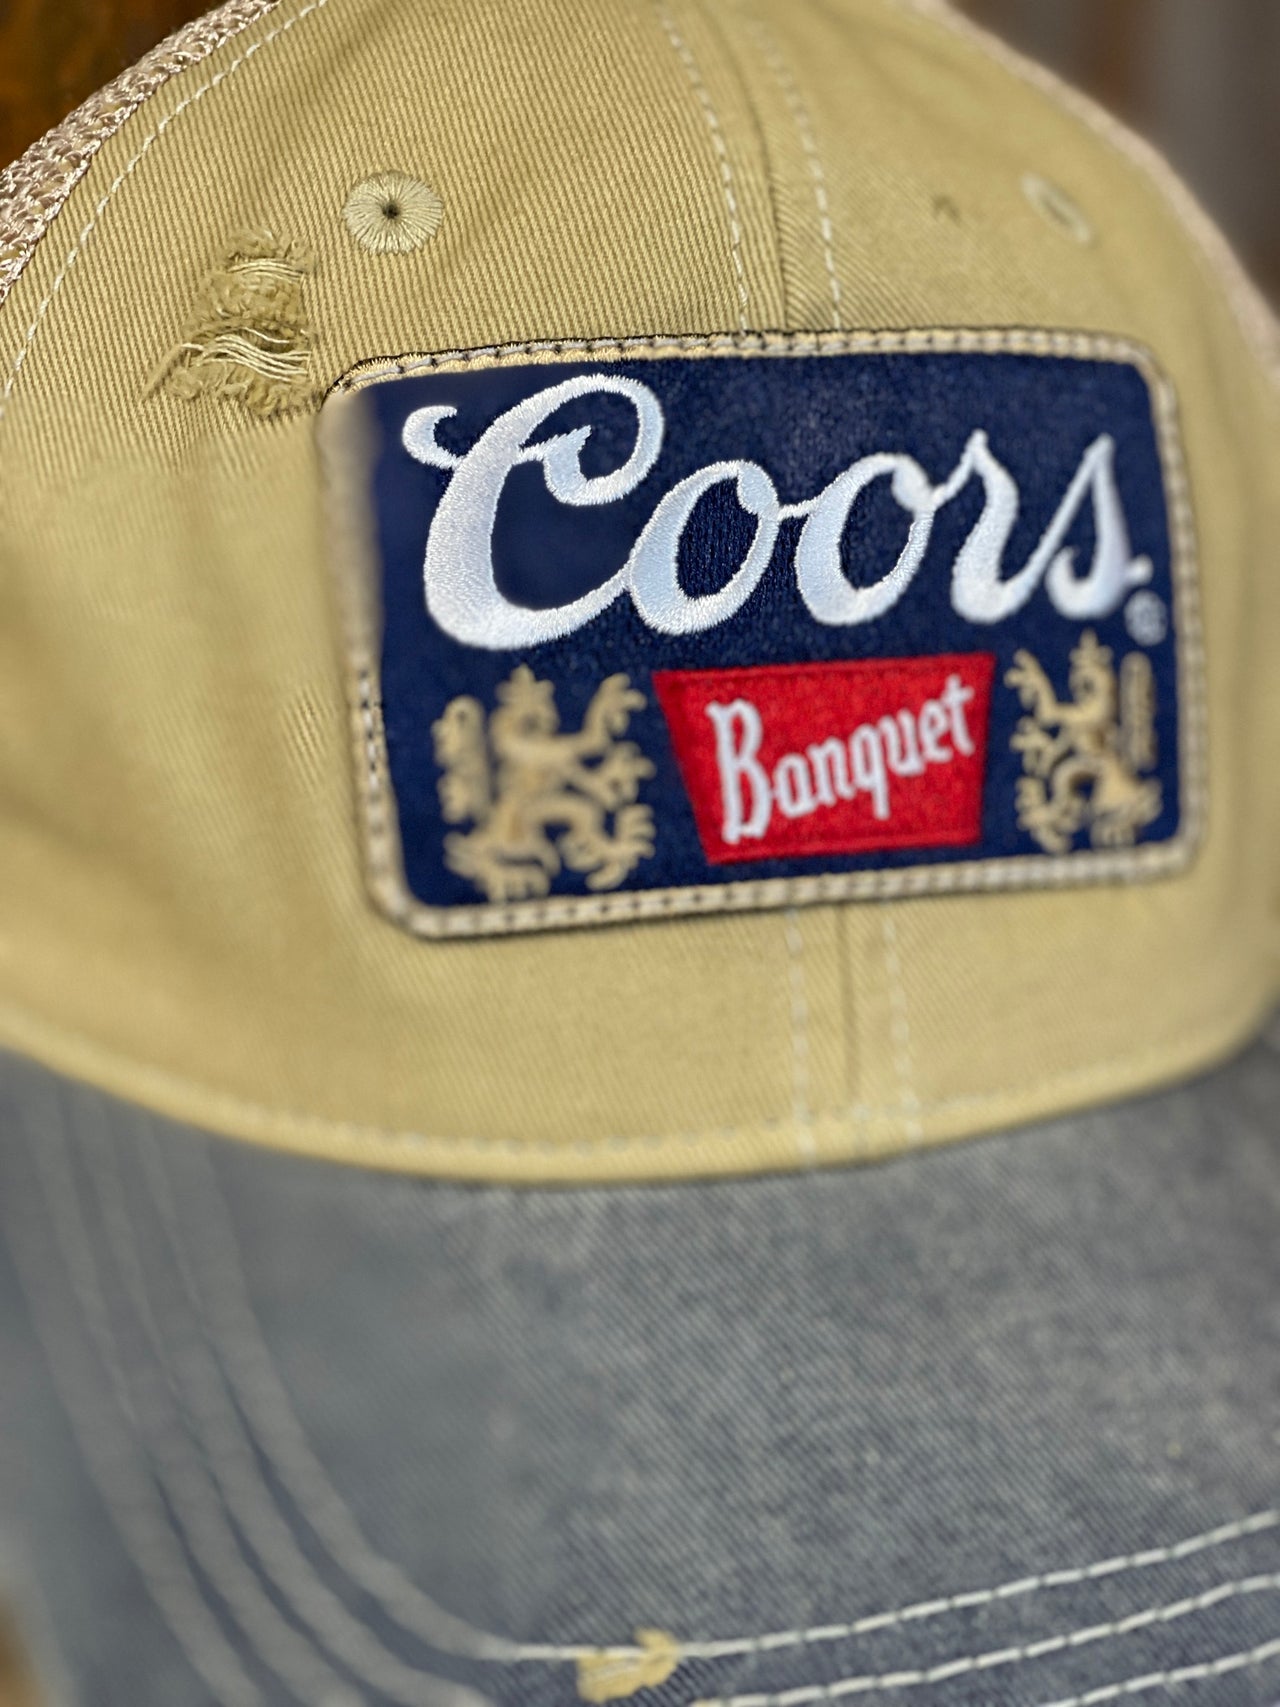 Coors Banquet Tri-Tone Hat- Distressed Snapback